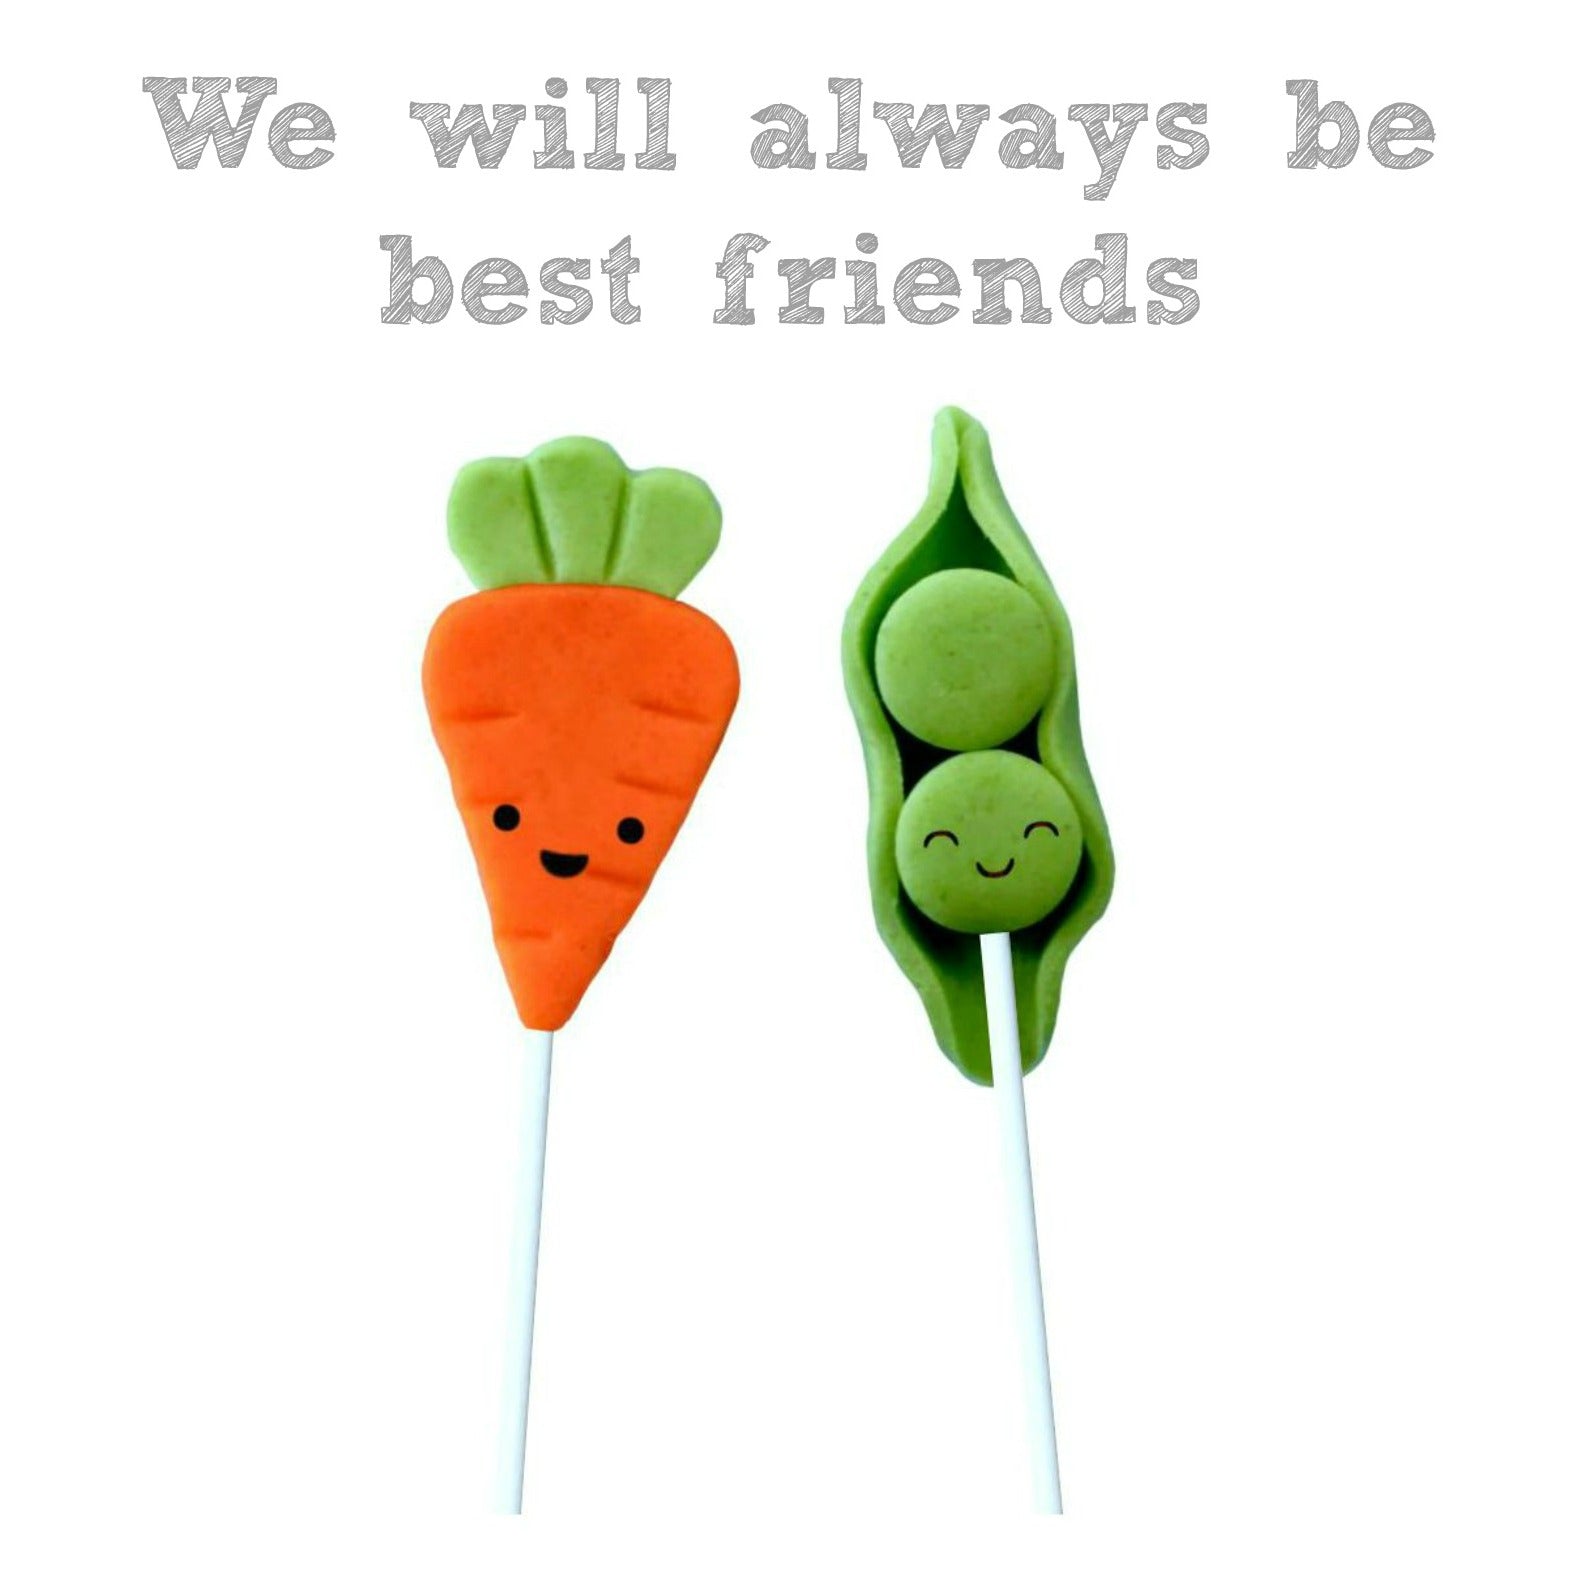 peas & carrots best friends marzipan candy lollipops